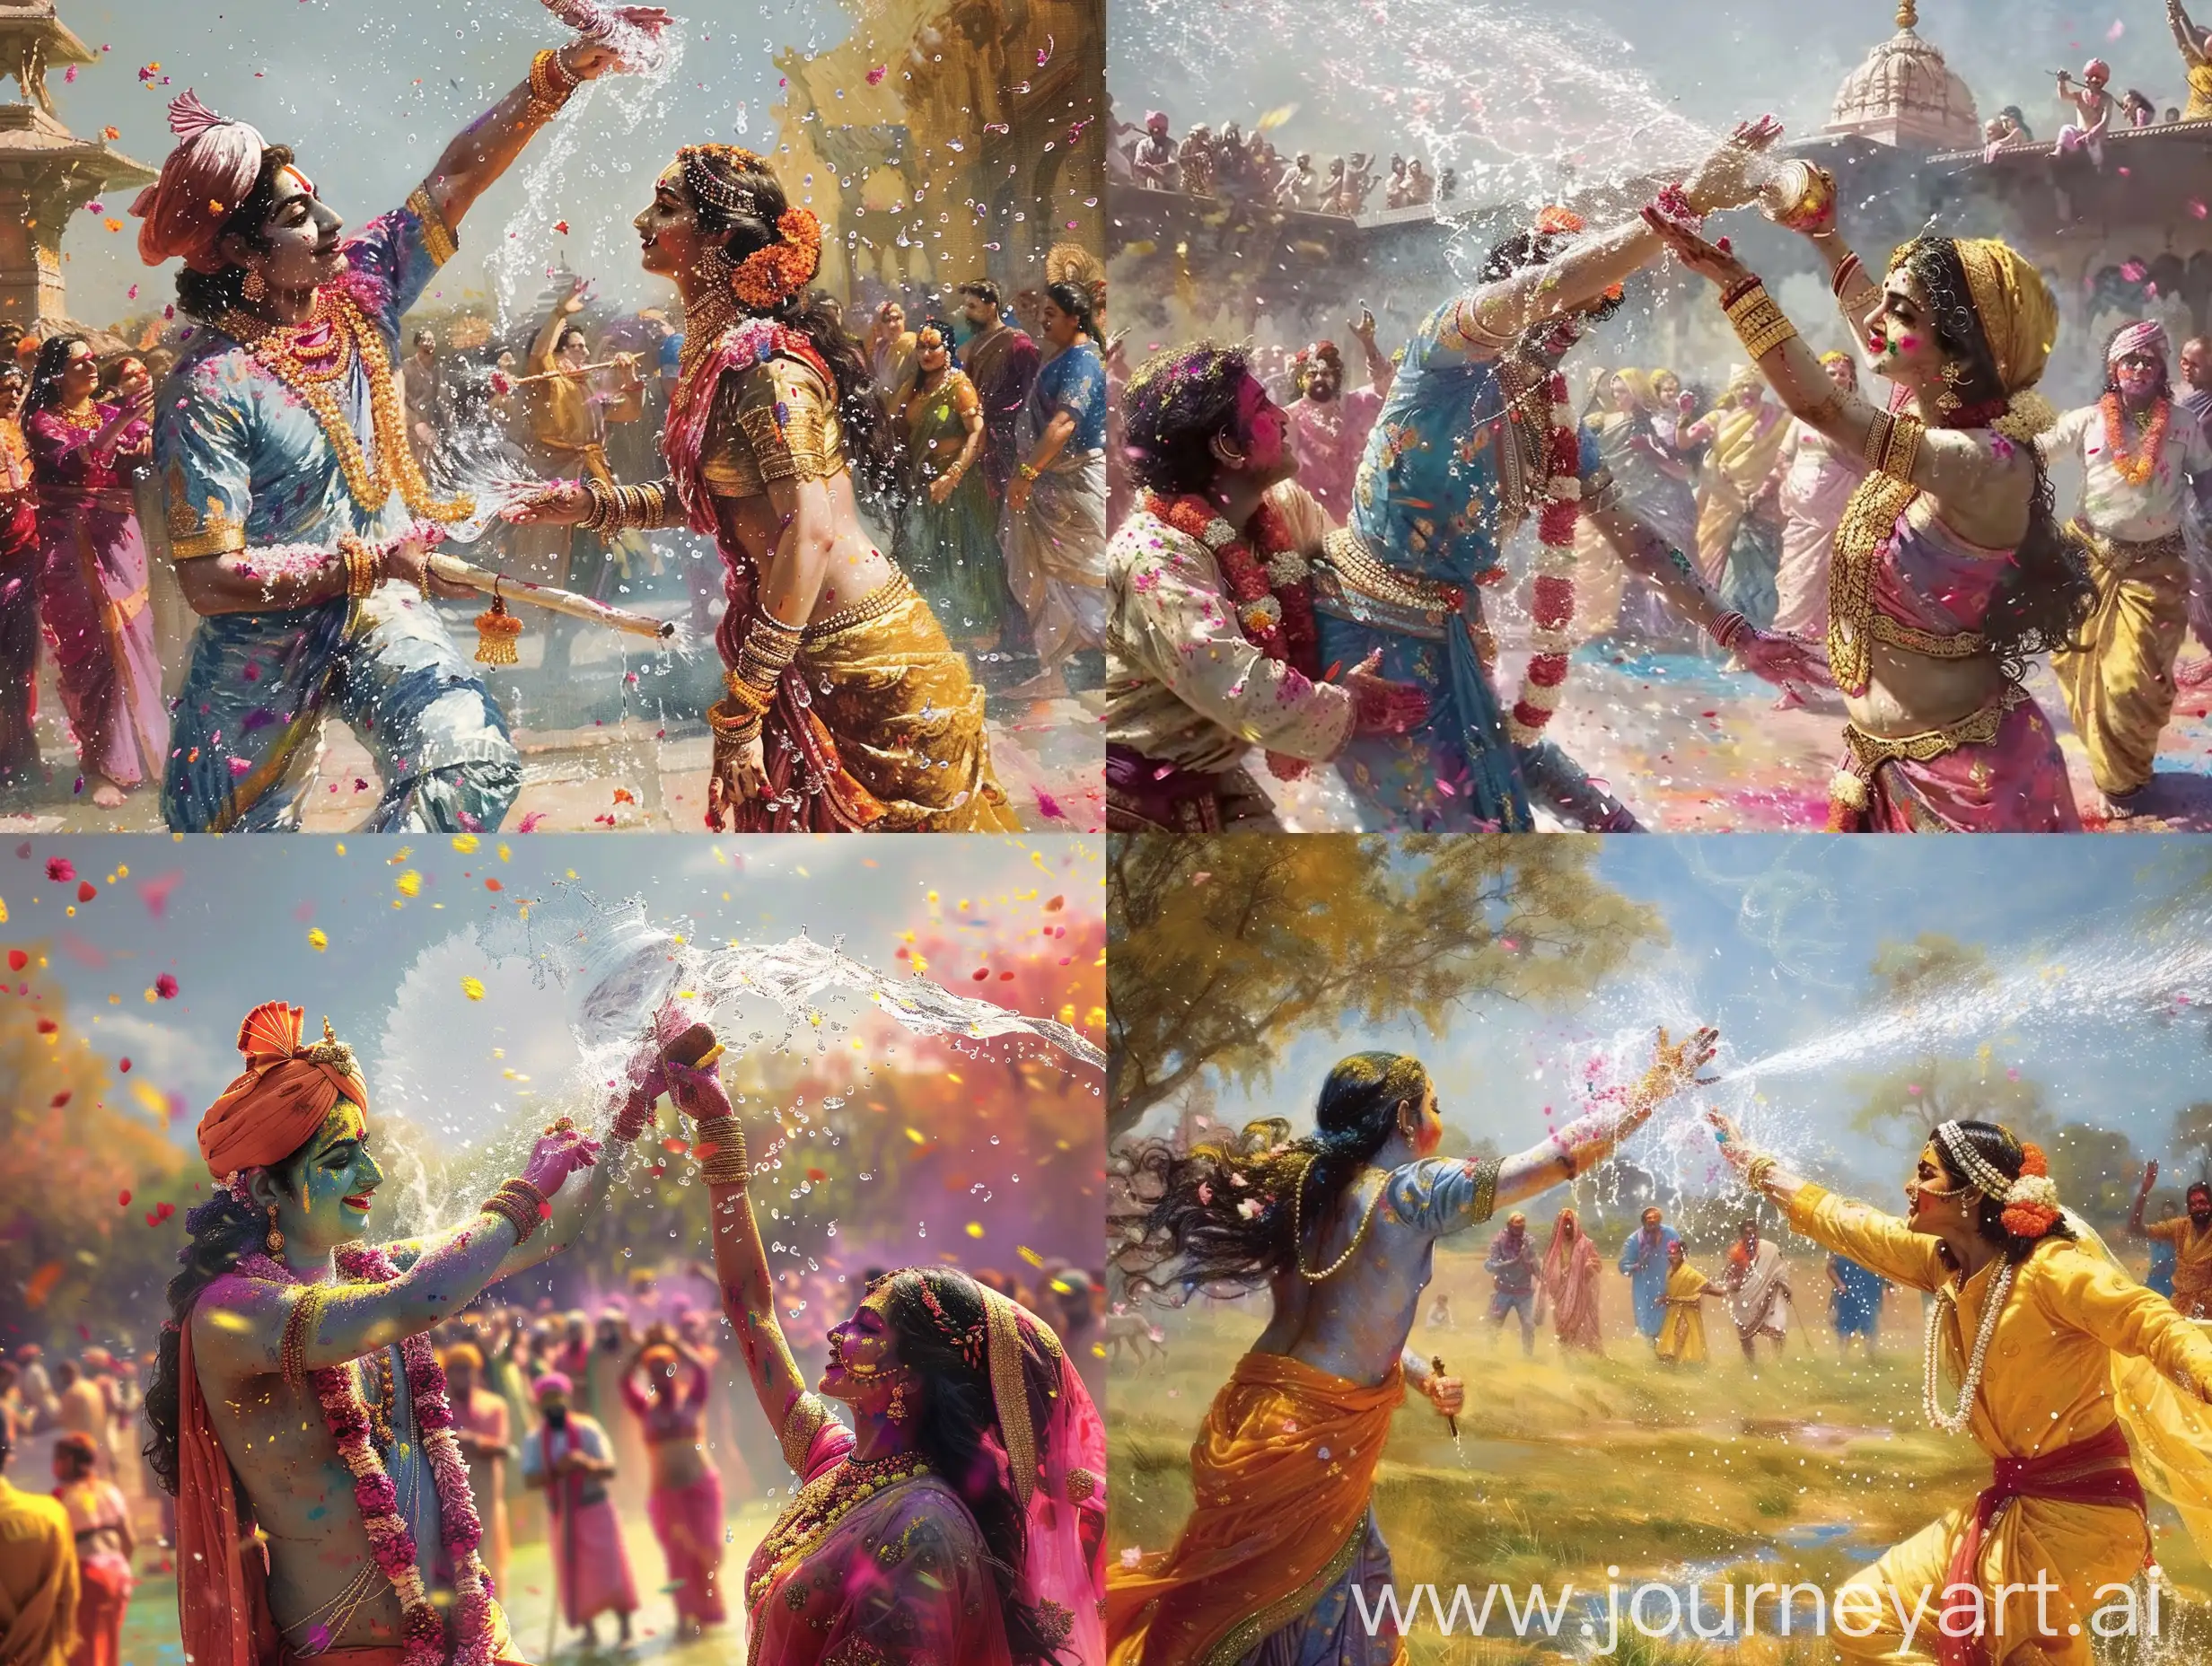 generate image shree krishna throughing water with pichkari to radha, people playing holi in background